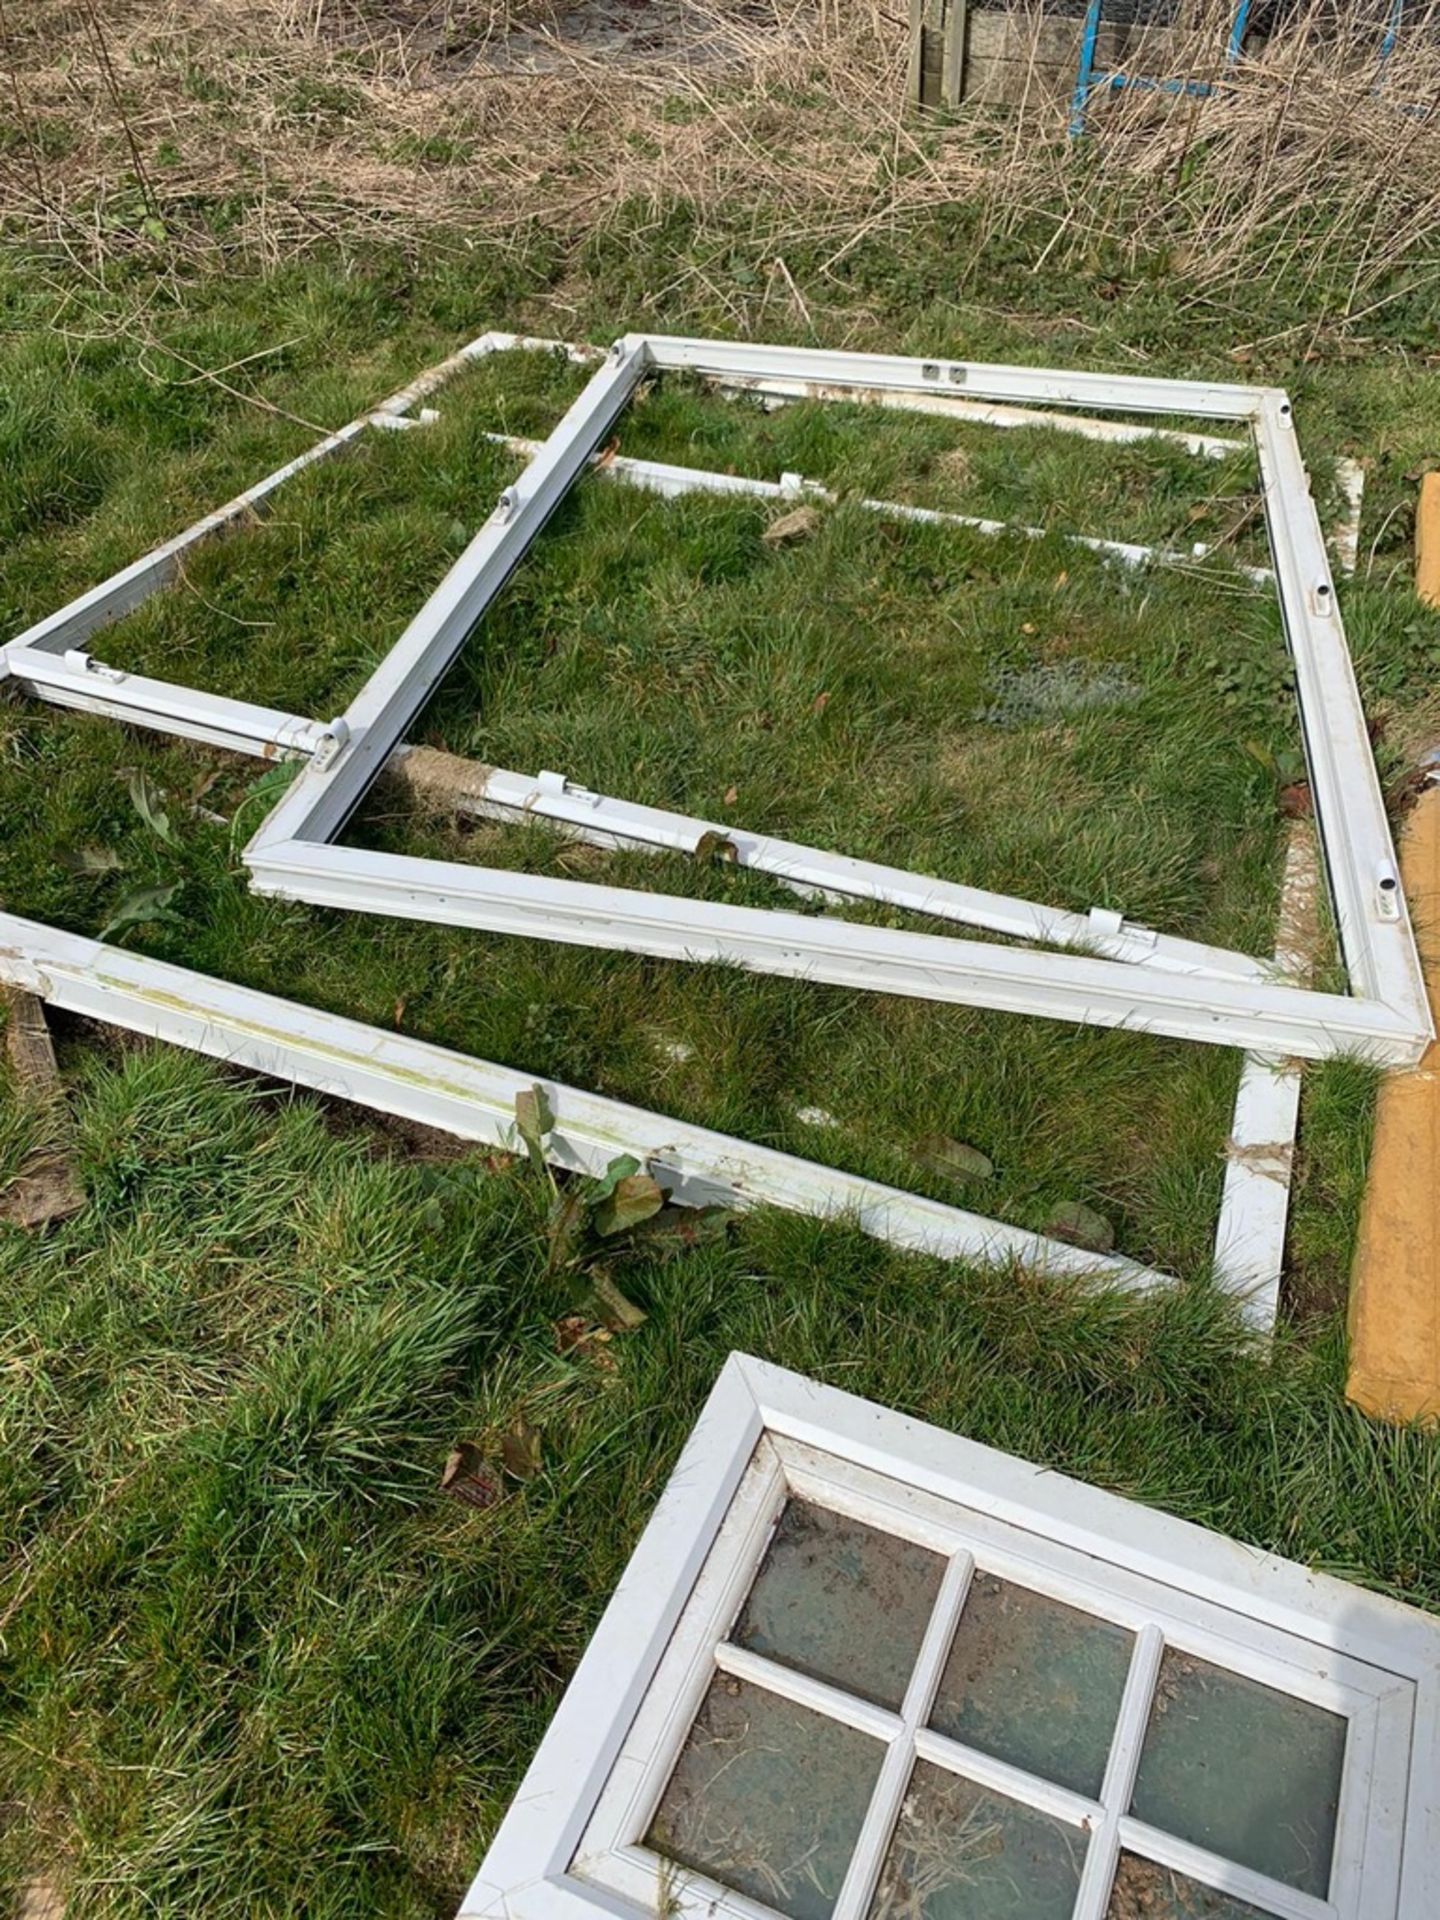 Complete dismantled conservatory - 3 glazed panels smashed - Image 5 of 6